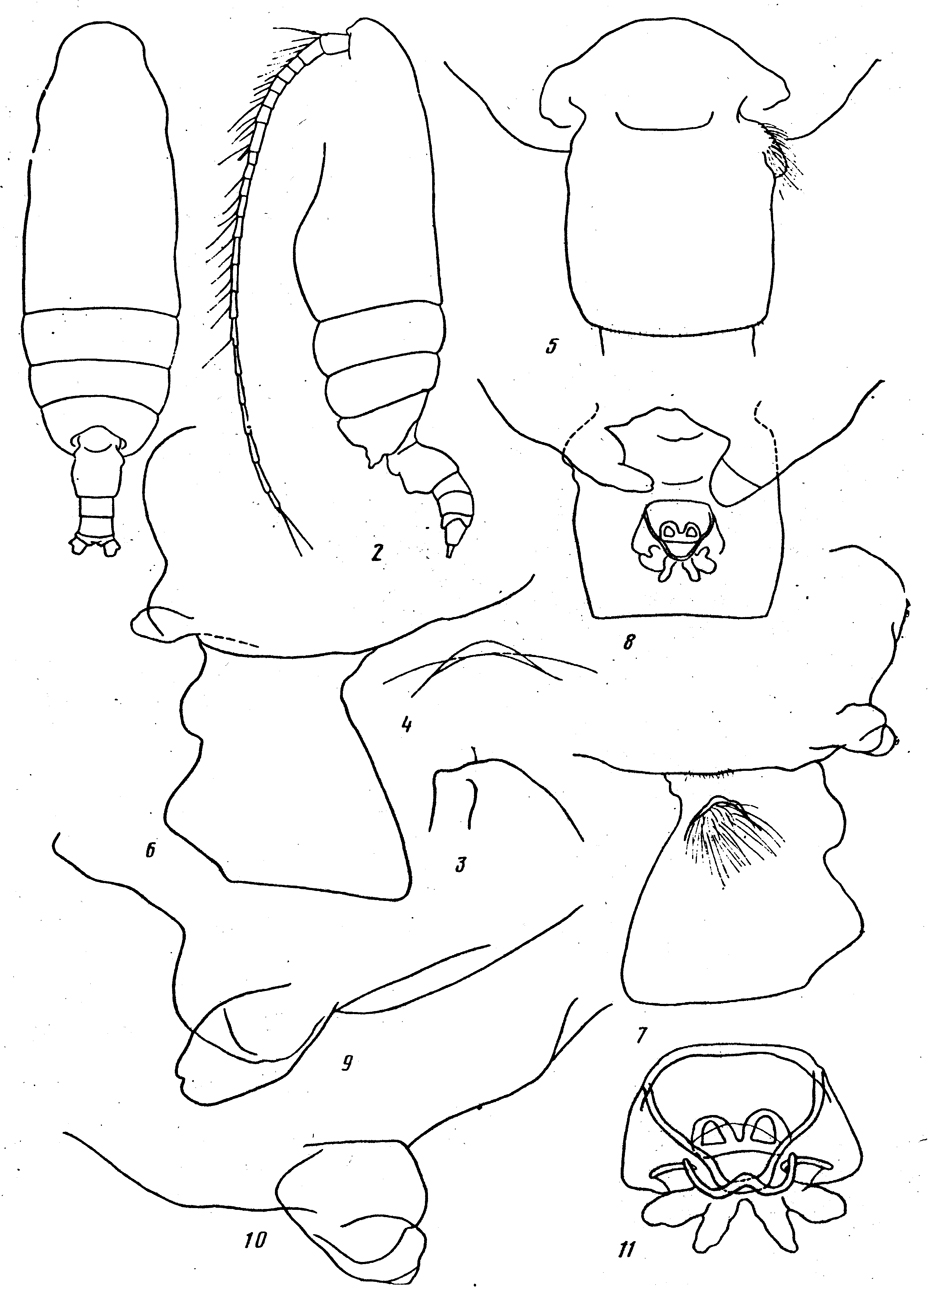 Espce Batheuchaeta gurjanovae - Planche 5 de figures morphologiques